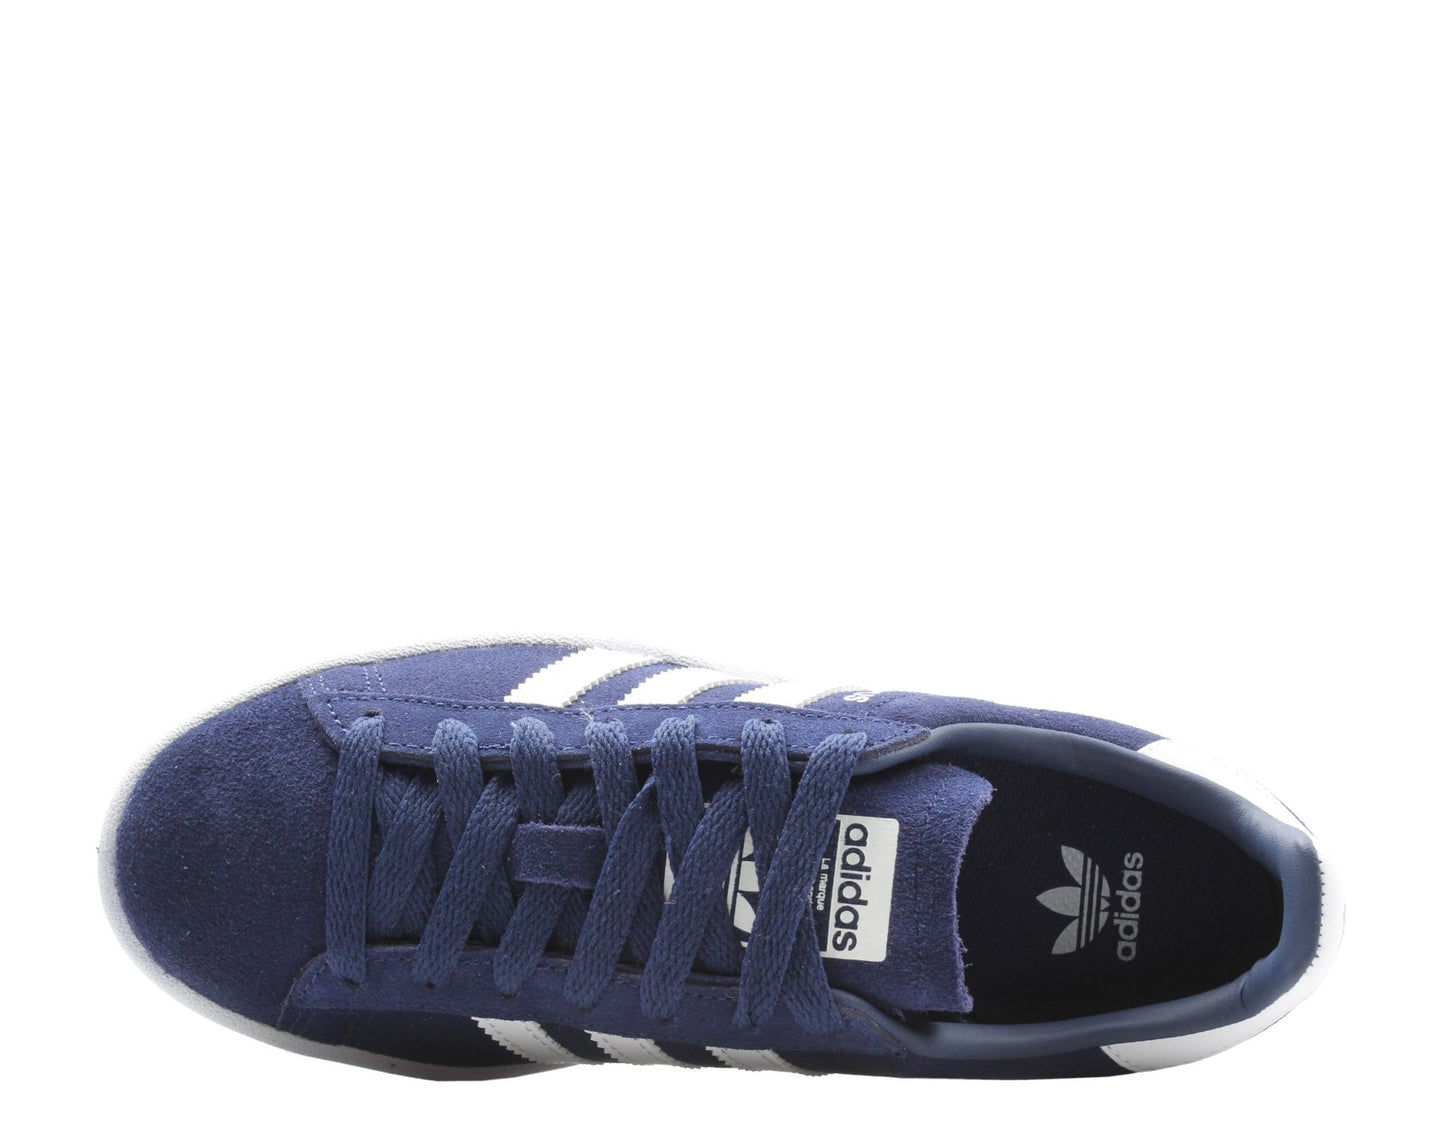 Adidas Originals Campus J Dark Blue/White Big Kids Casual Shoes BY9579 - Becauze